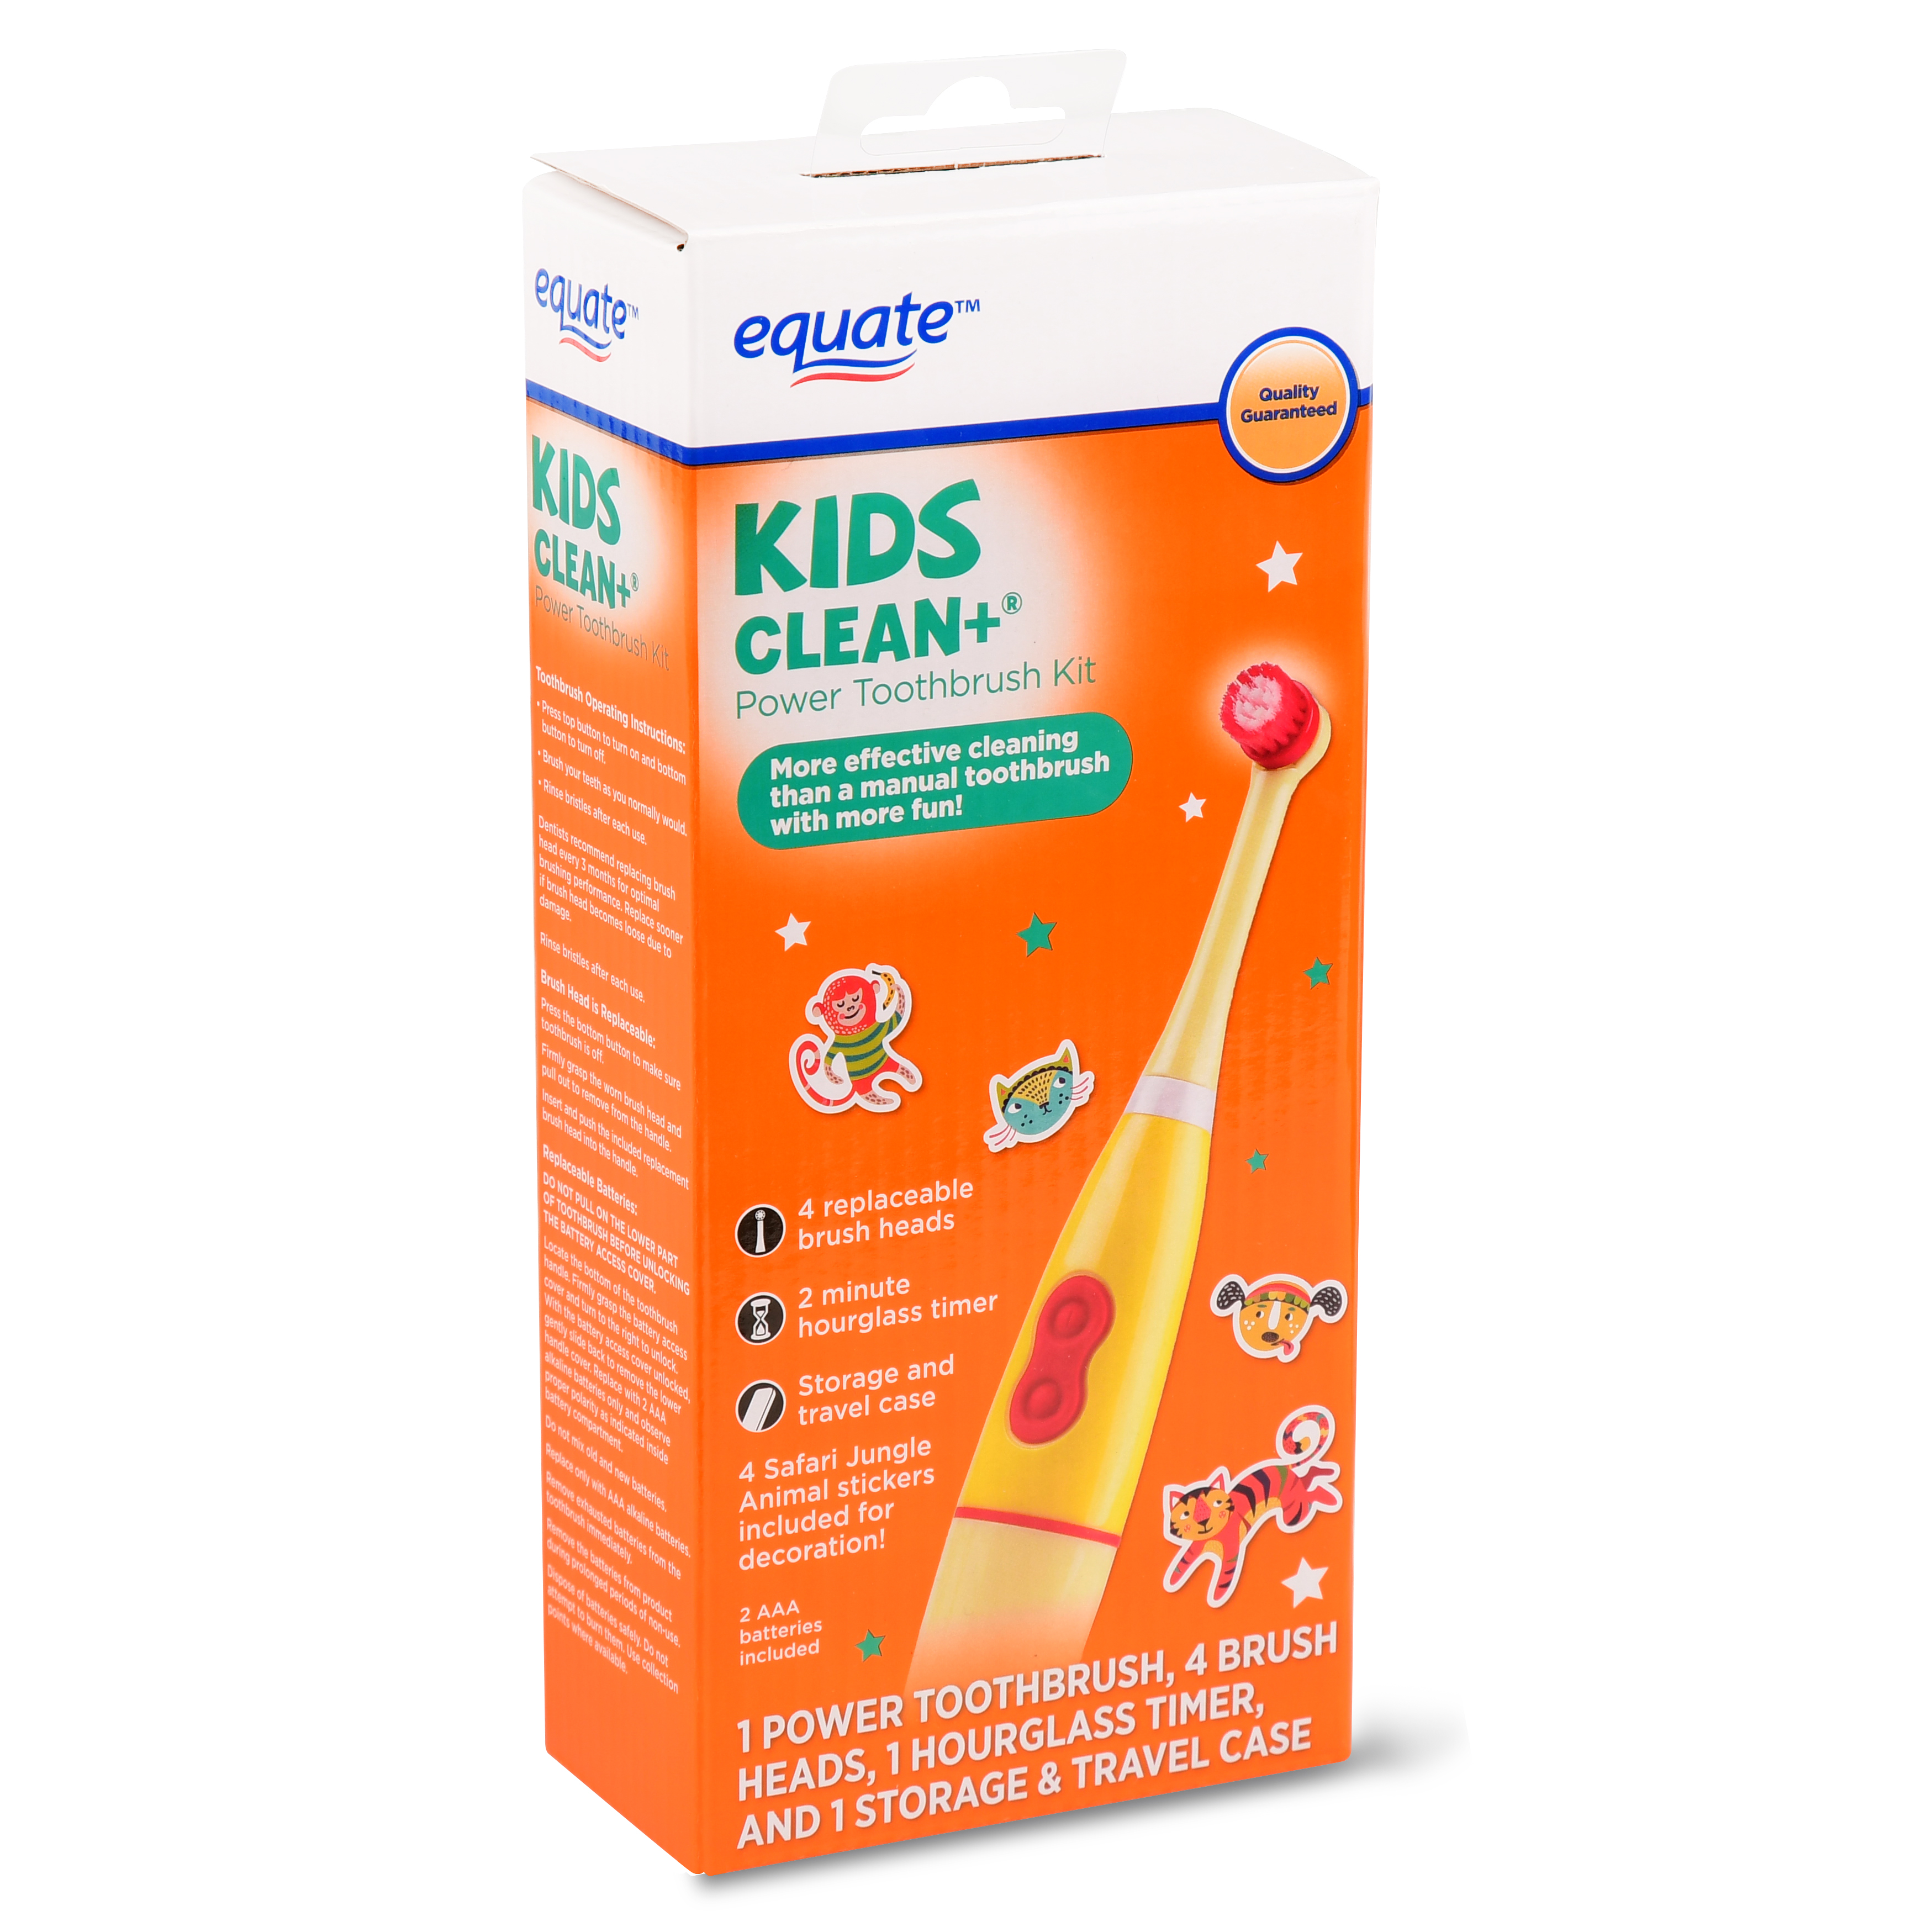 Equate Kids Clean+ Power Toothbrush Kit - image 3 of 8